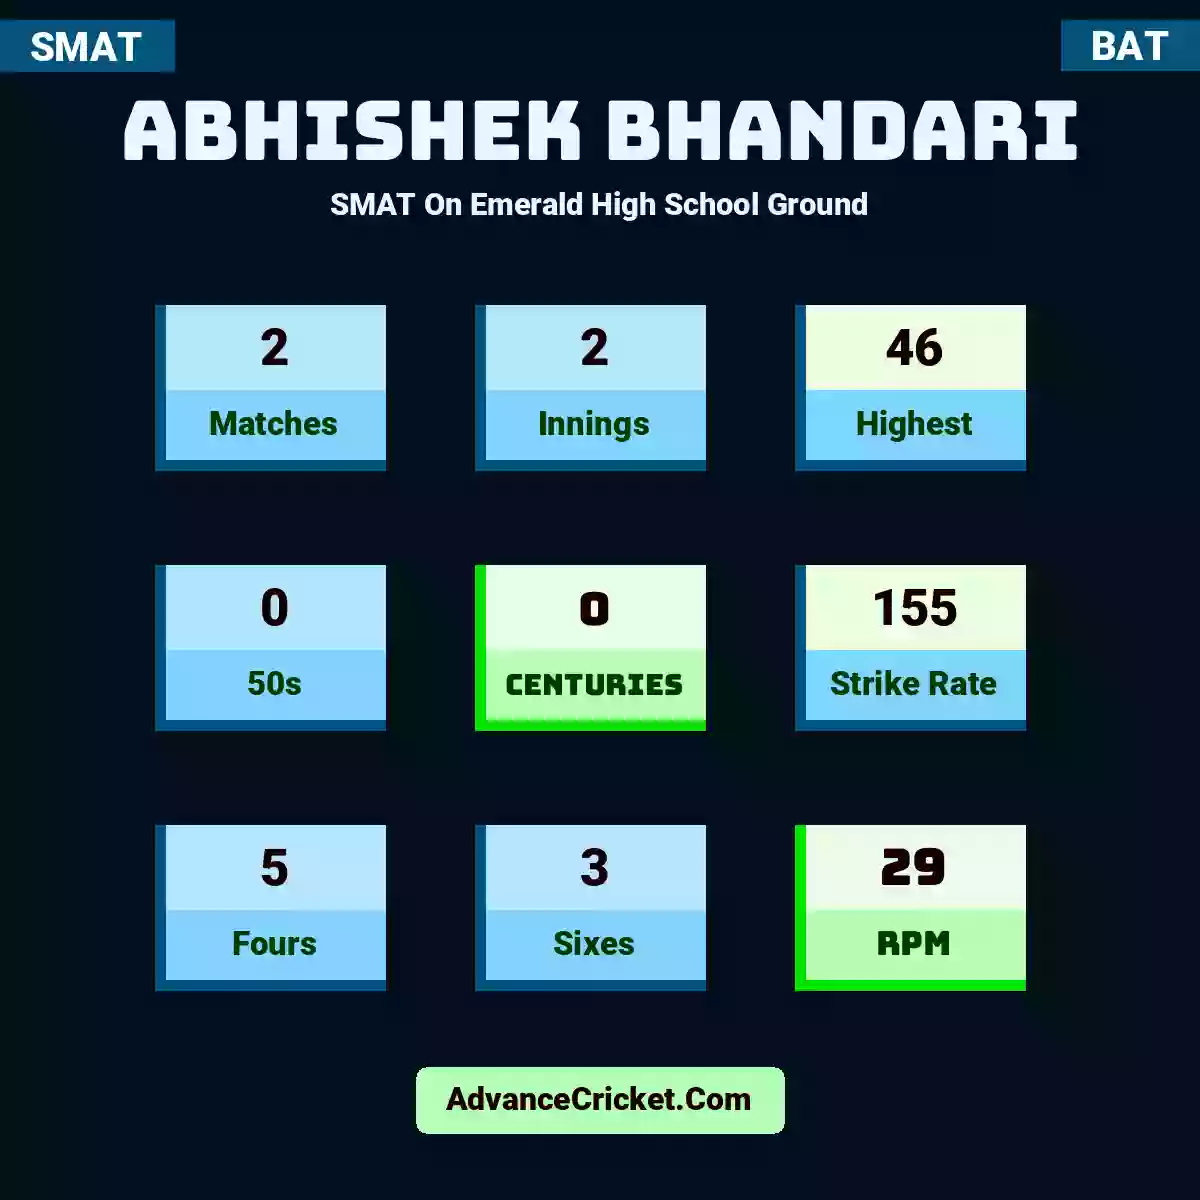 Abhishek Bhandari SMAT  On Emerald High School Ground, Abhishek Bhandari played 2 matches, scored 46 runs as highest, 0 half-centuries, and 0 centuries, with a strike rate of 155. A.Bhandari hit 5 fours and 3 sixes, with an RPM of 29.